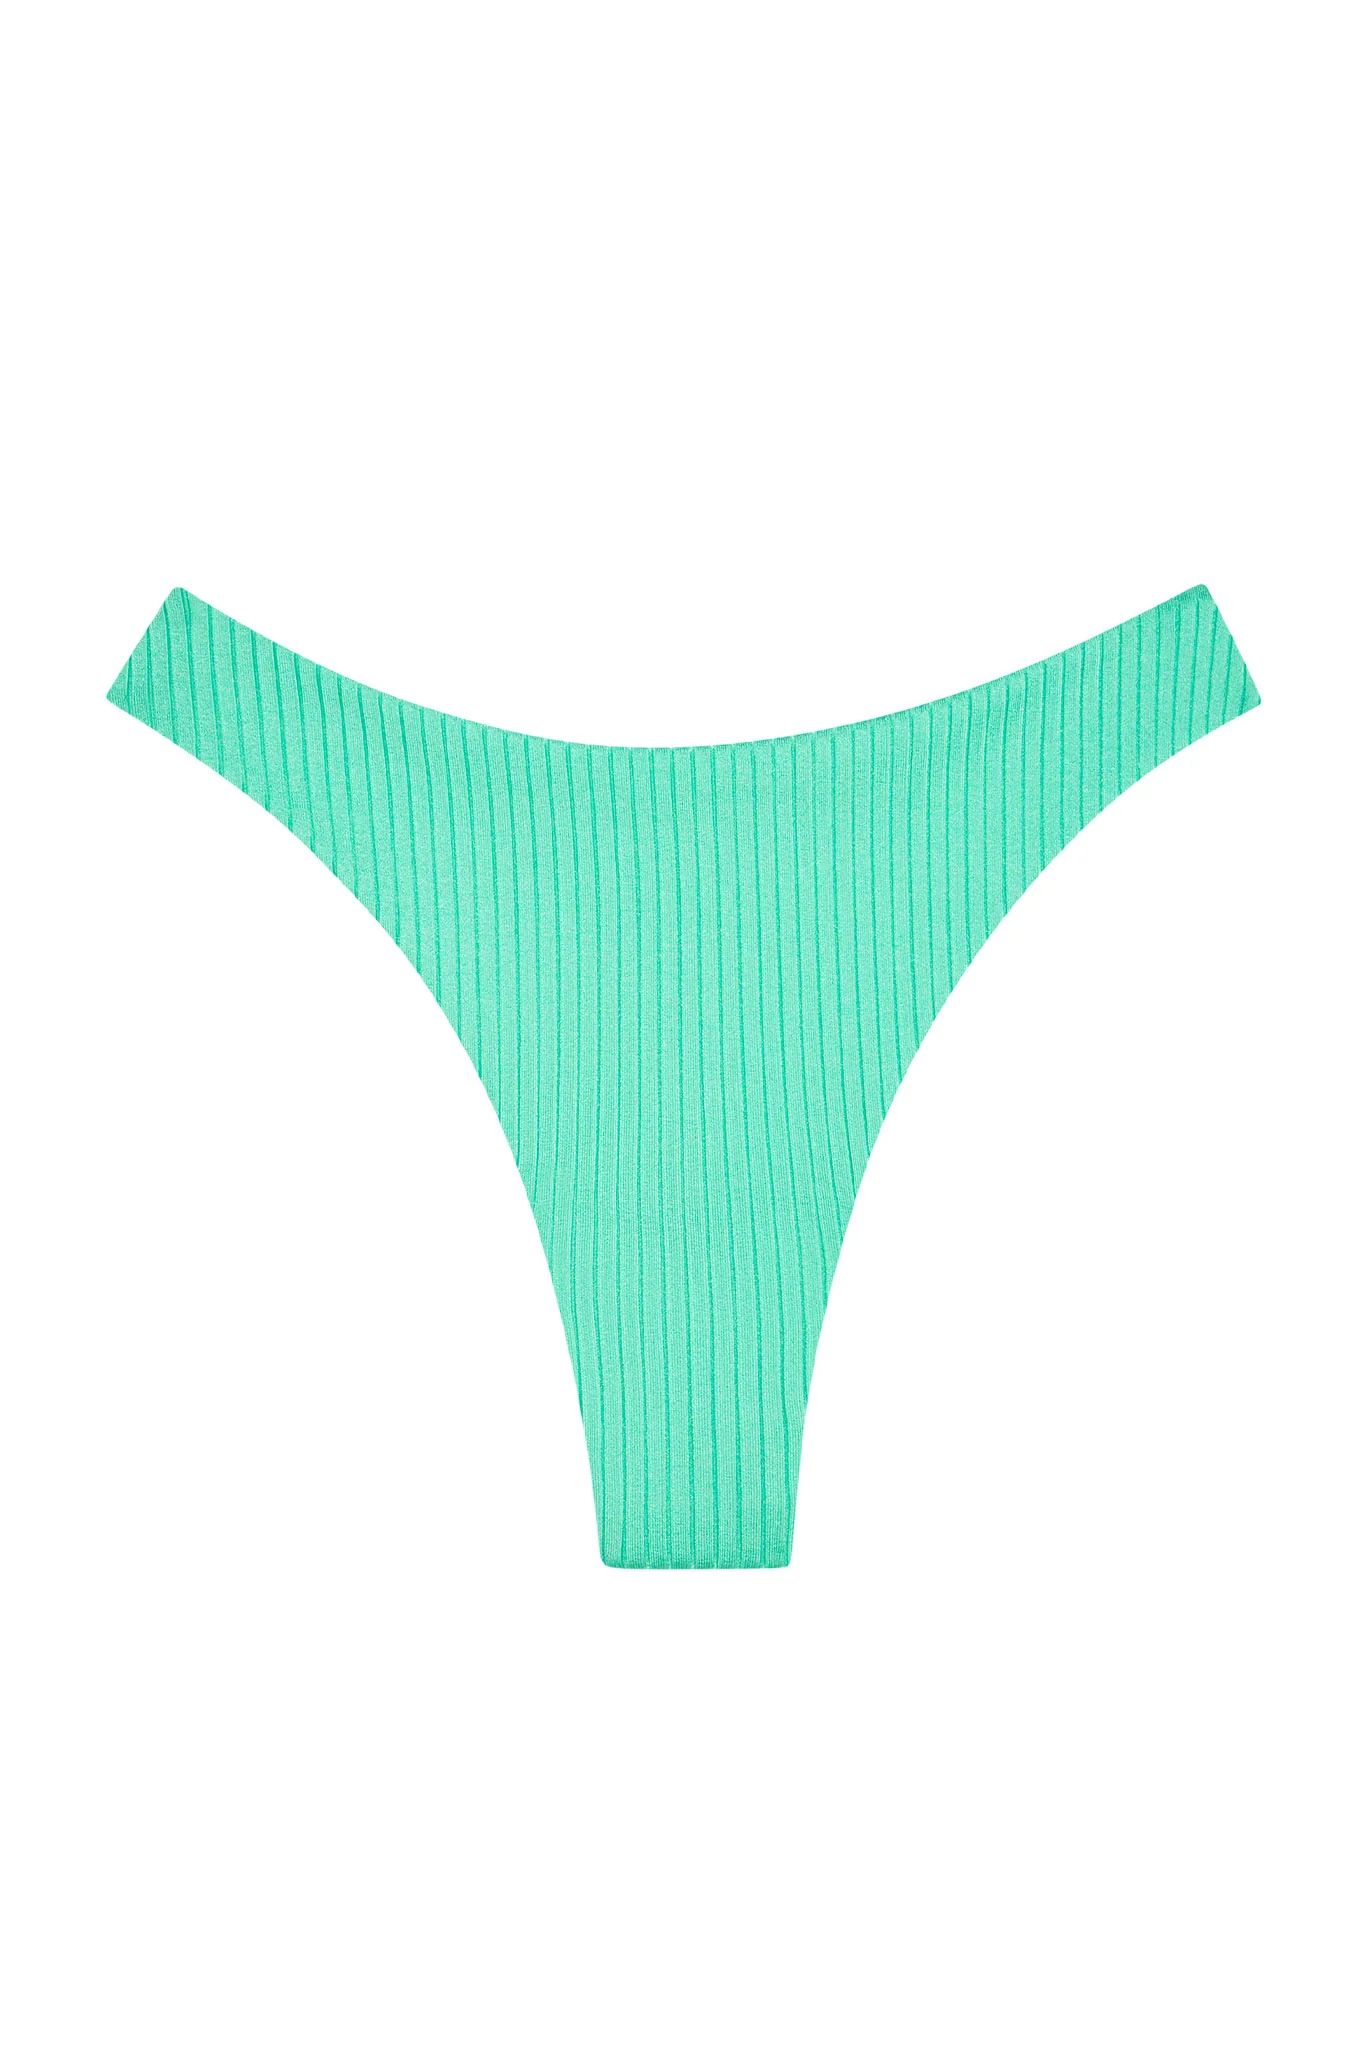 Capri Thong - Turquoise Wide Rib | Monday Swimwear